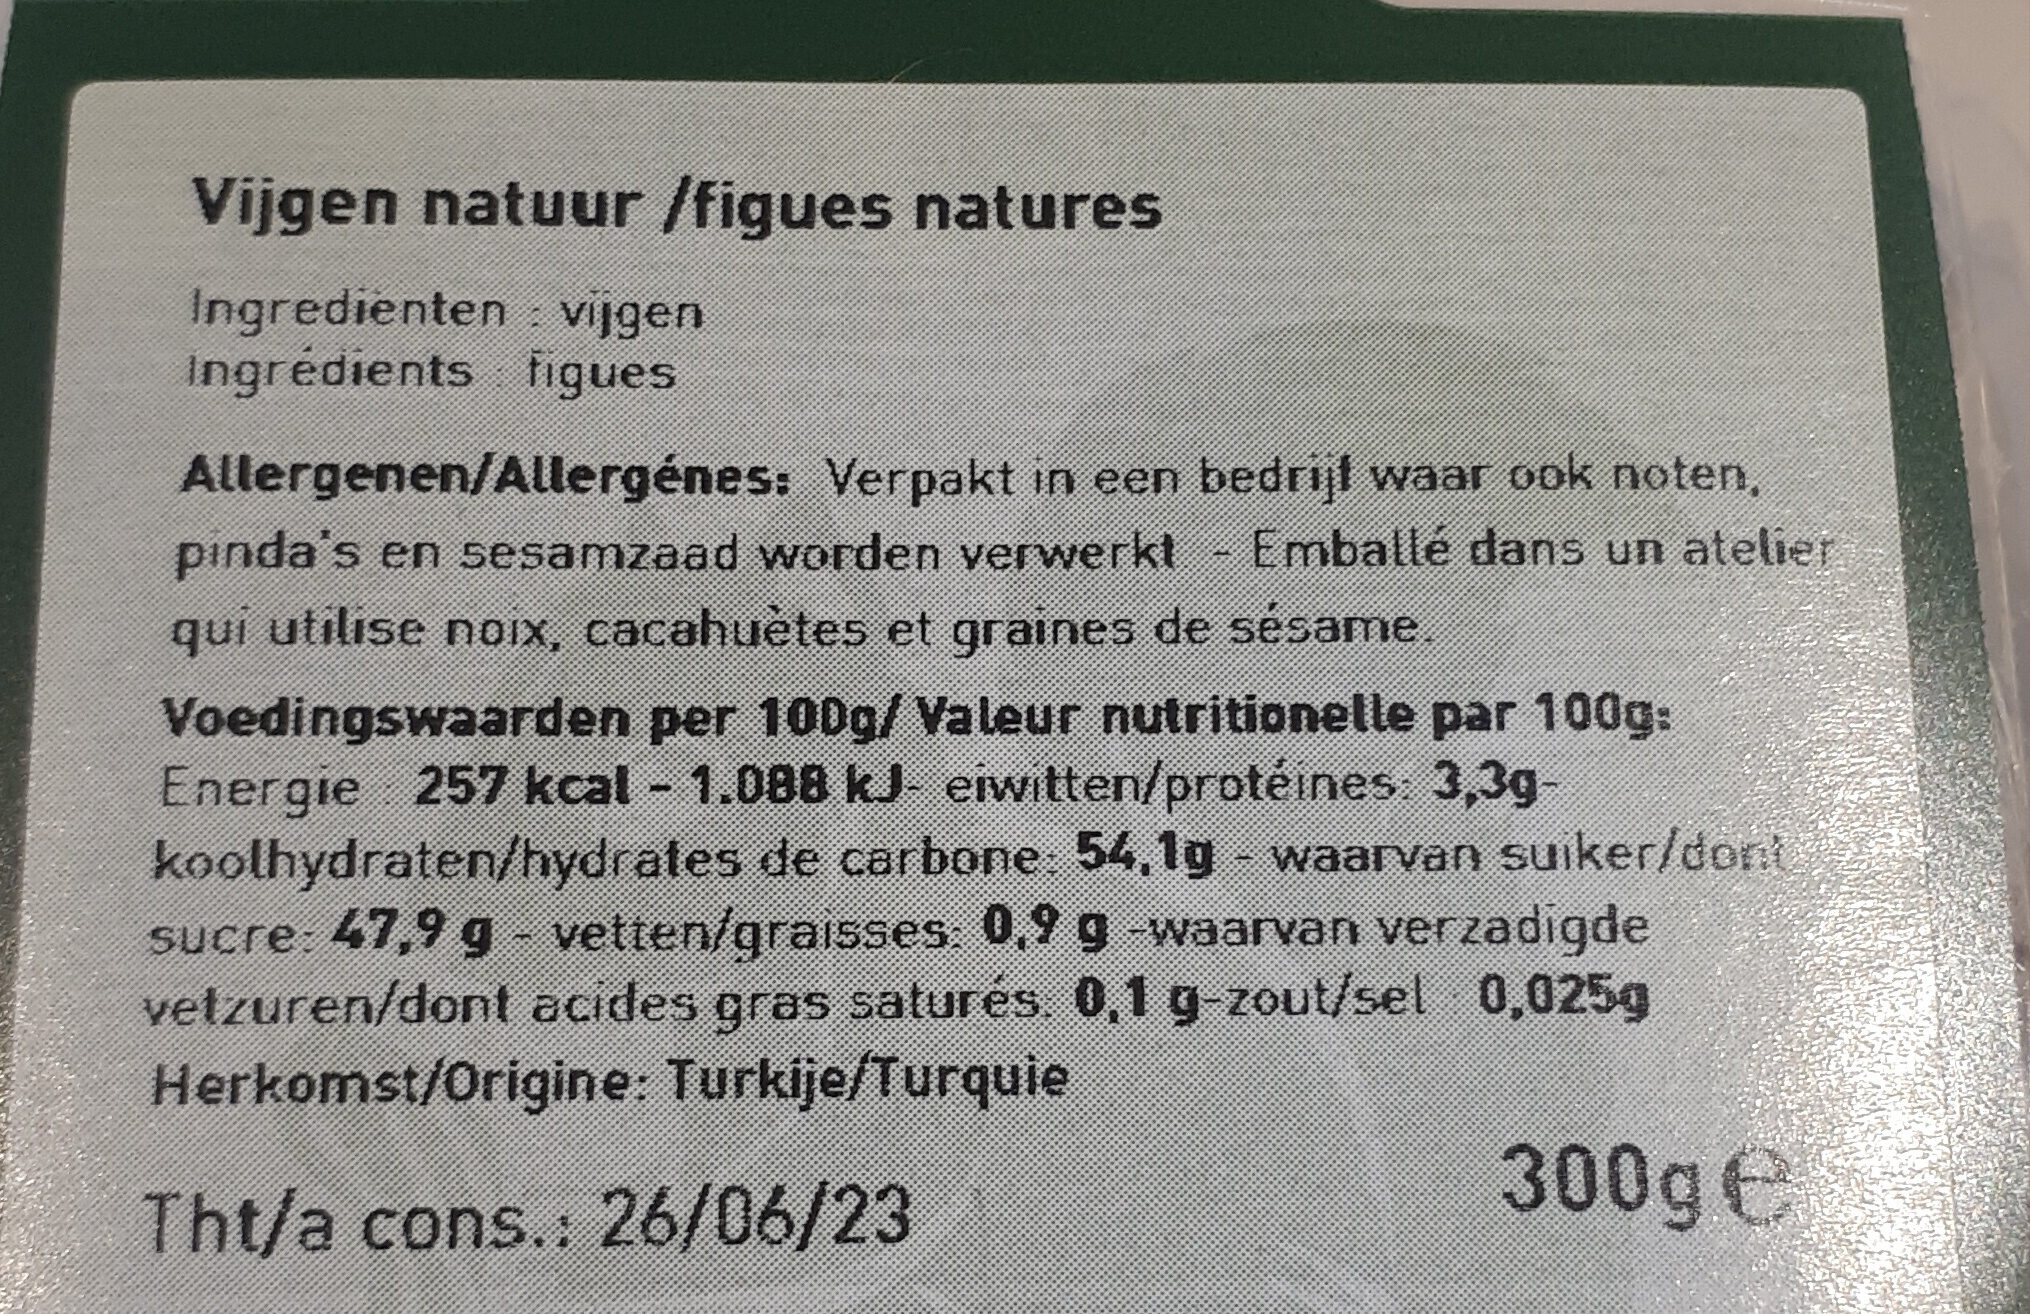 vijgen - Tableau nutritionnel - nl